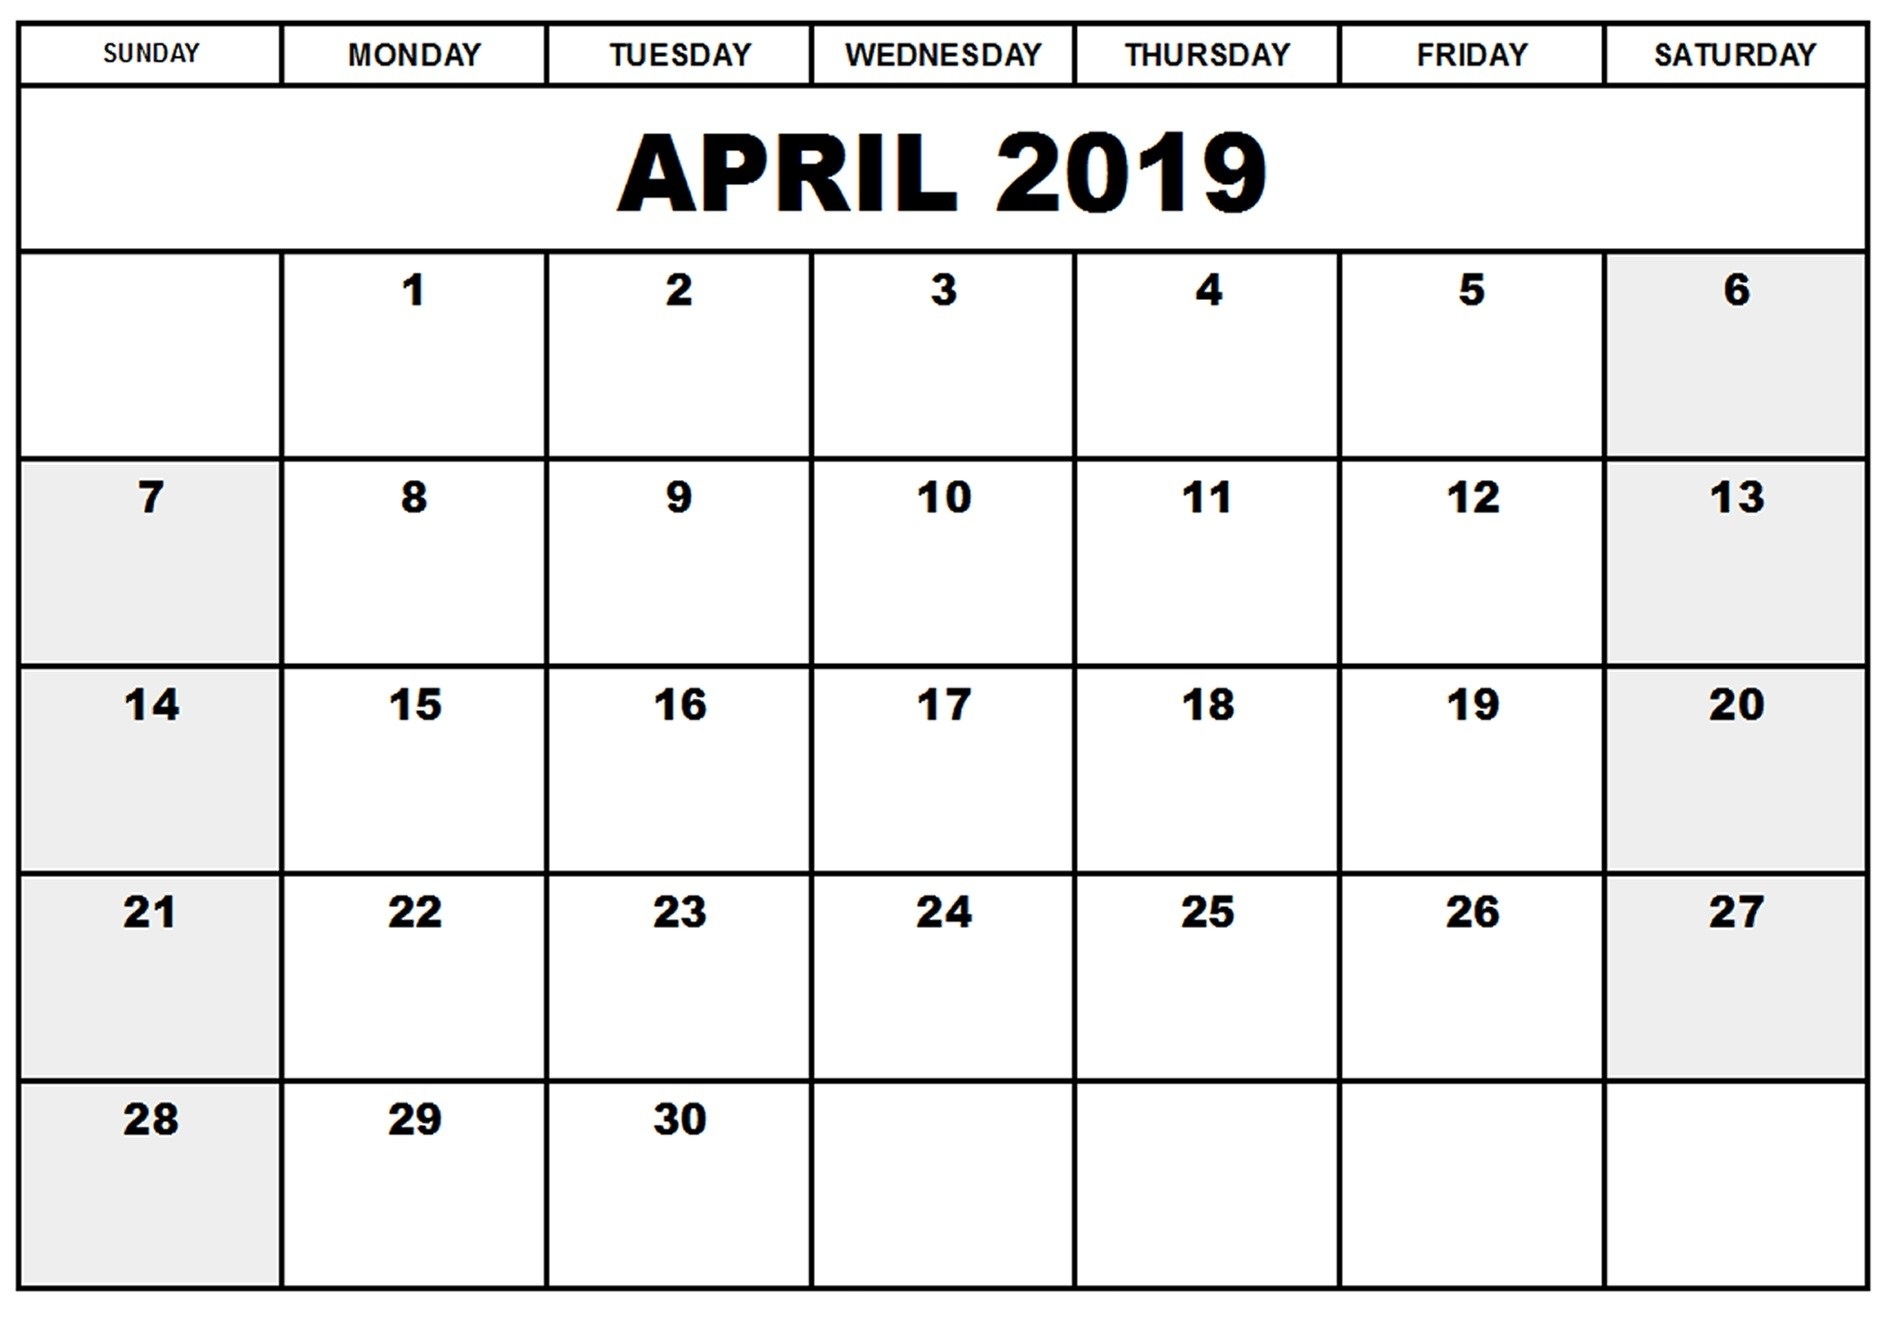 April 2019 Printable Calendar Templates - Free Blank, Holidays for Free Blank Calendar Templates To Print